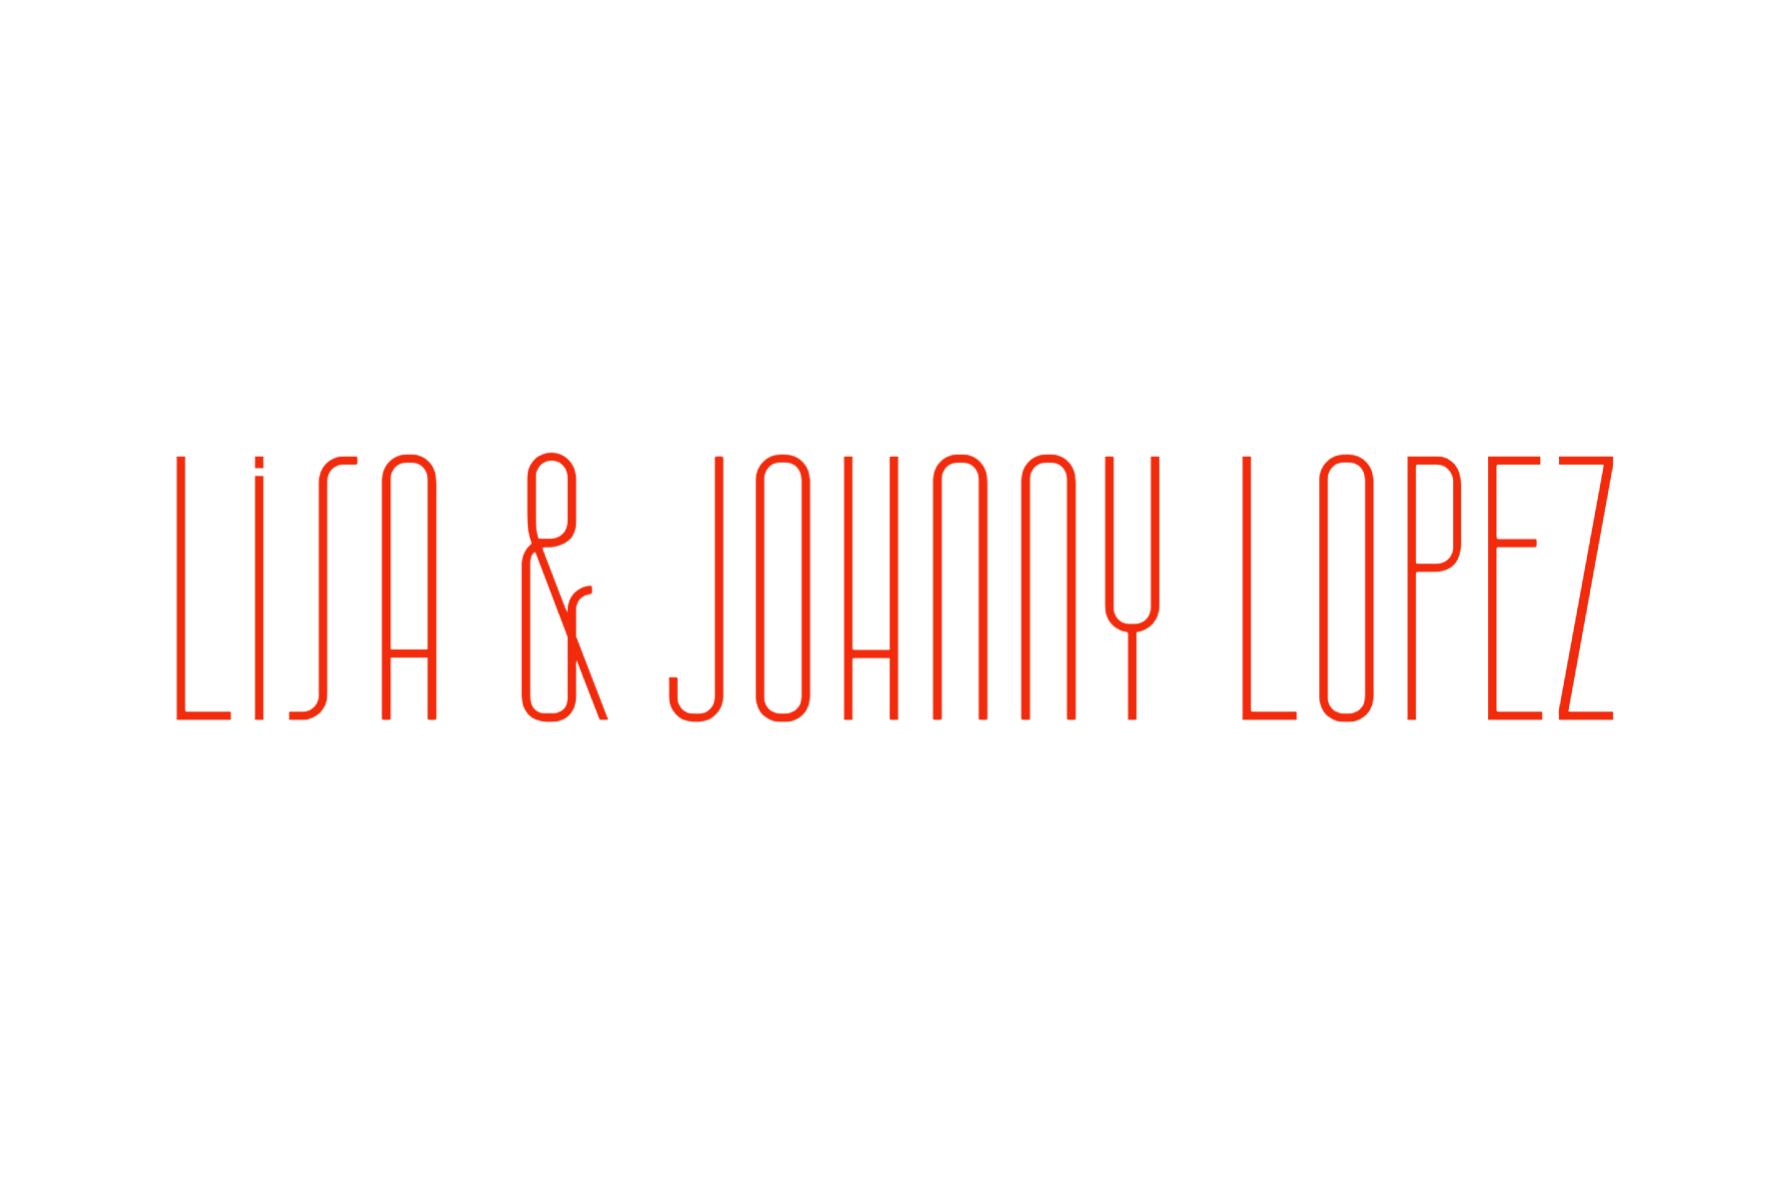 OIC_Lisa & Johnny Lopez_logo